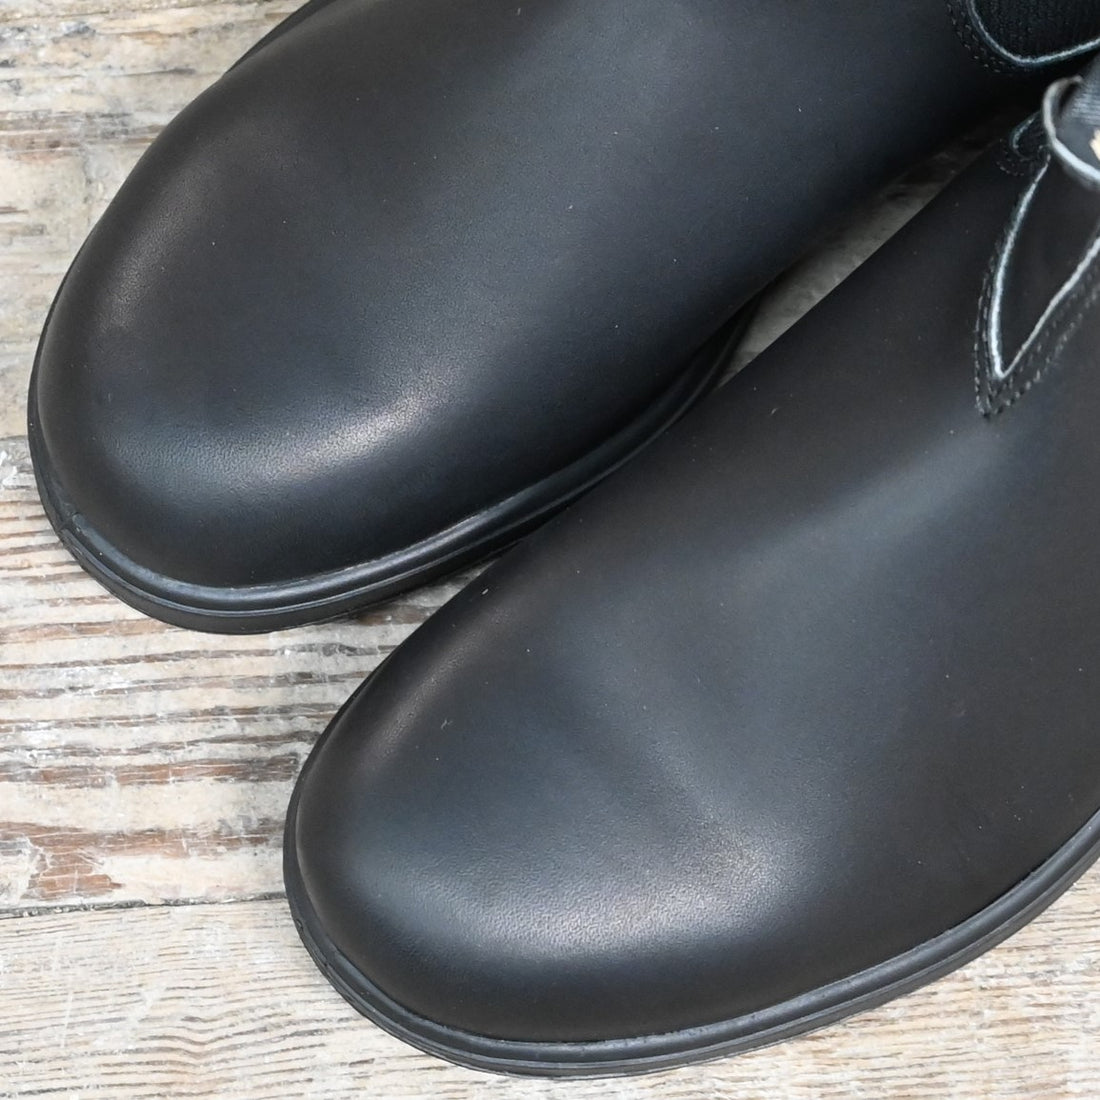 Blundstone Slip On In Premium Black Leather view of toe